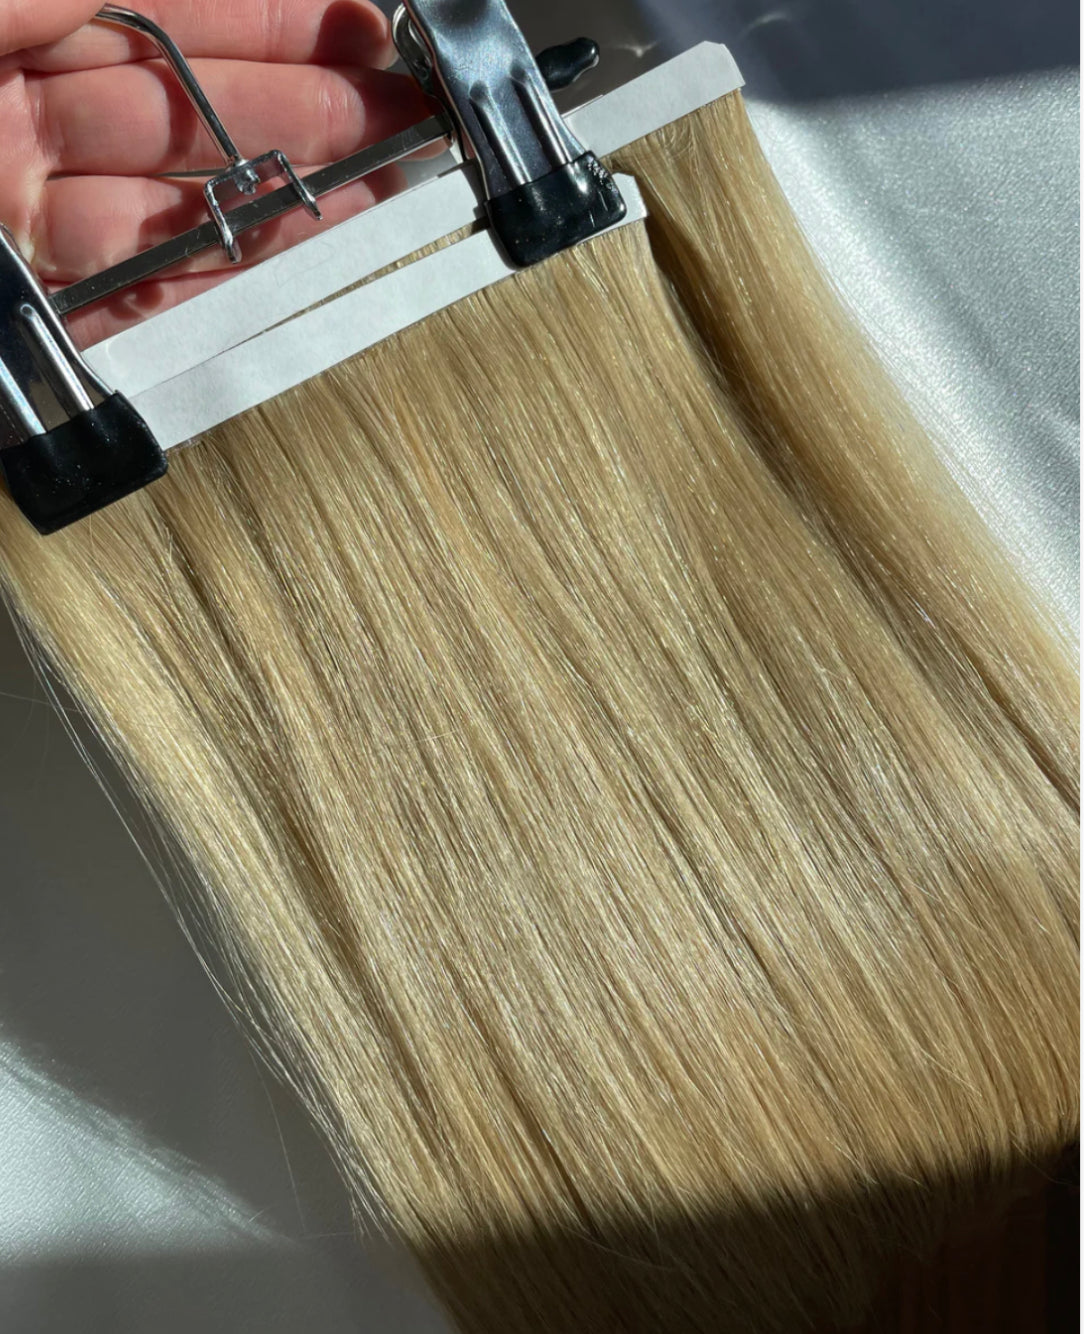 Beige Blonde Straight DIY Hair Extensions Home Kit